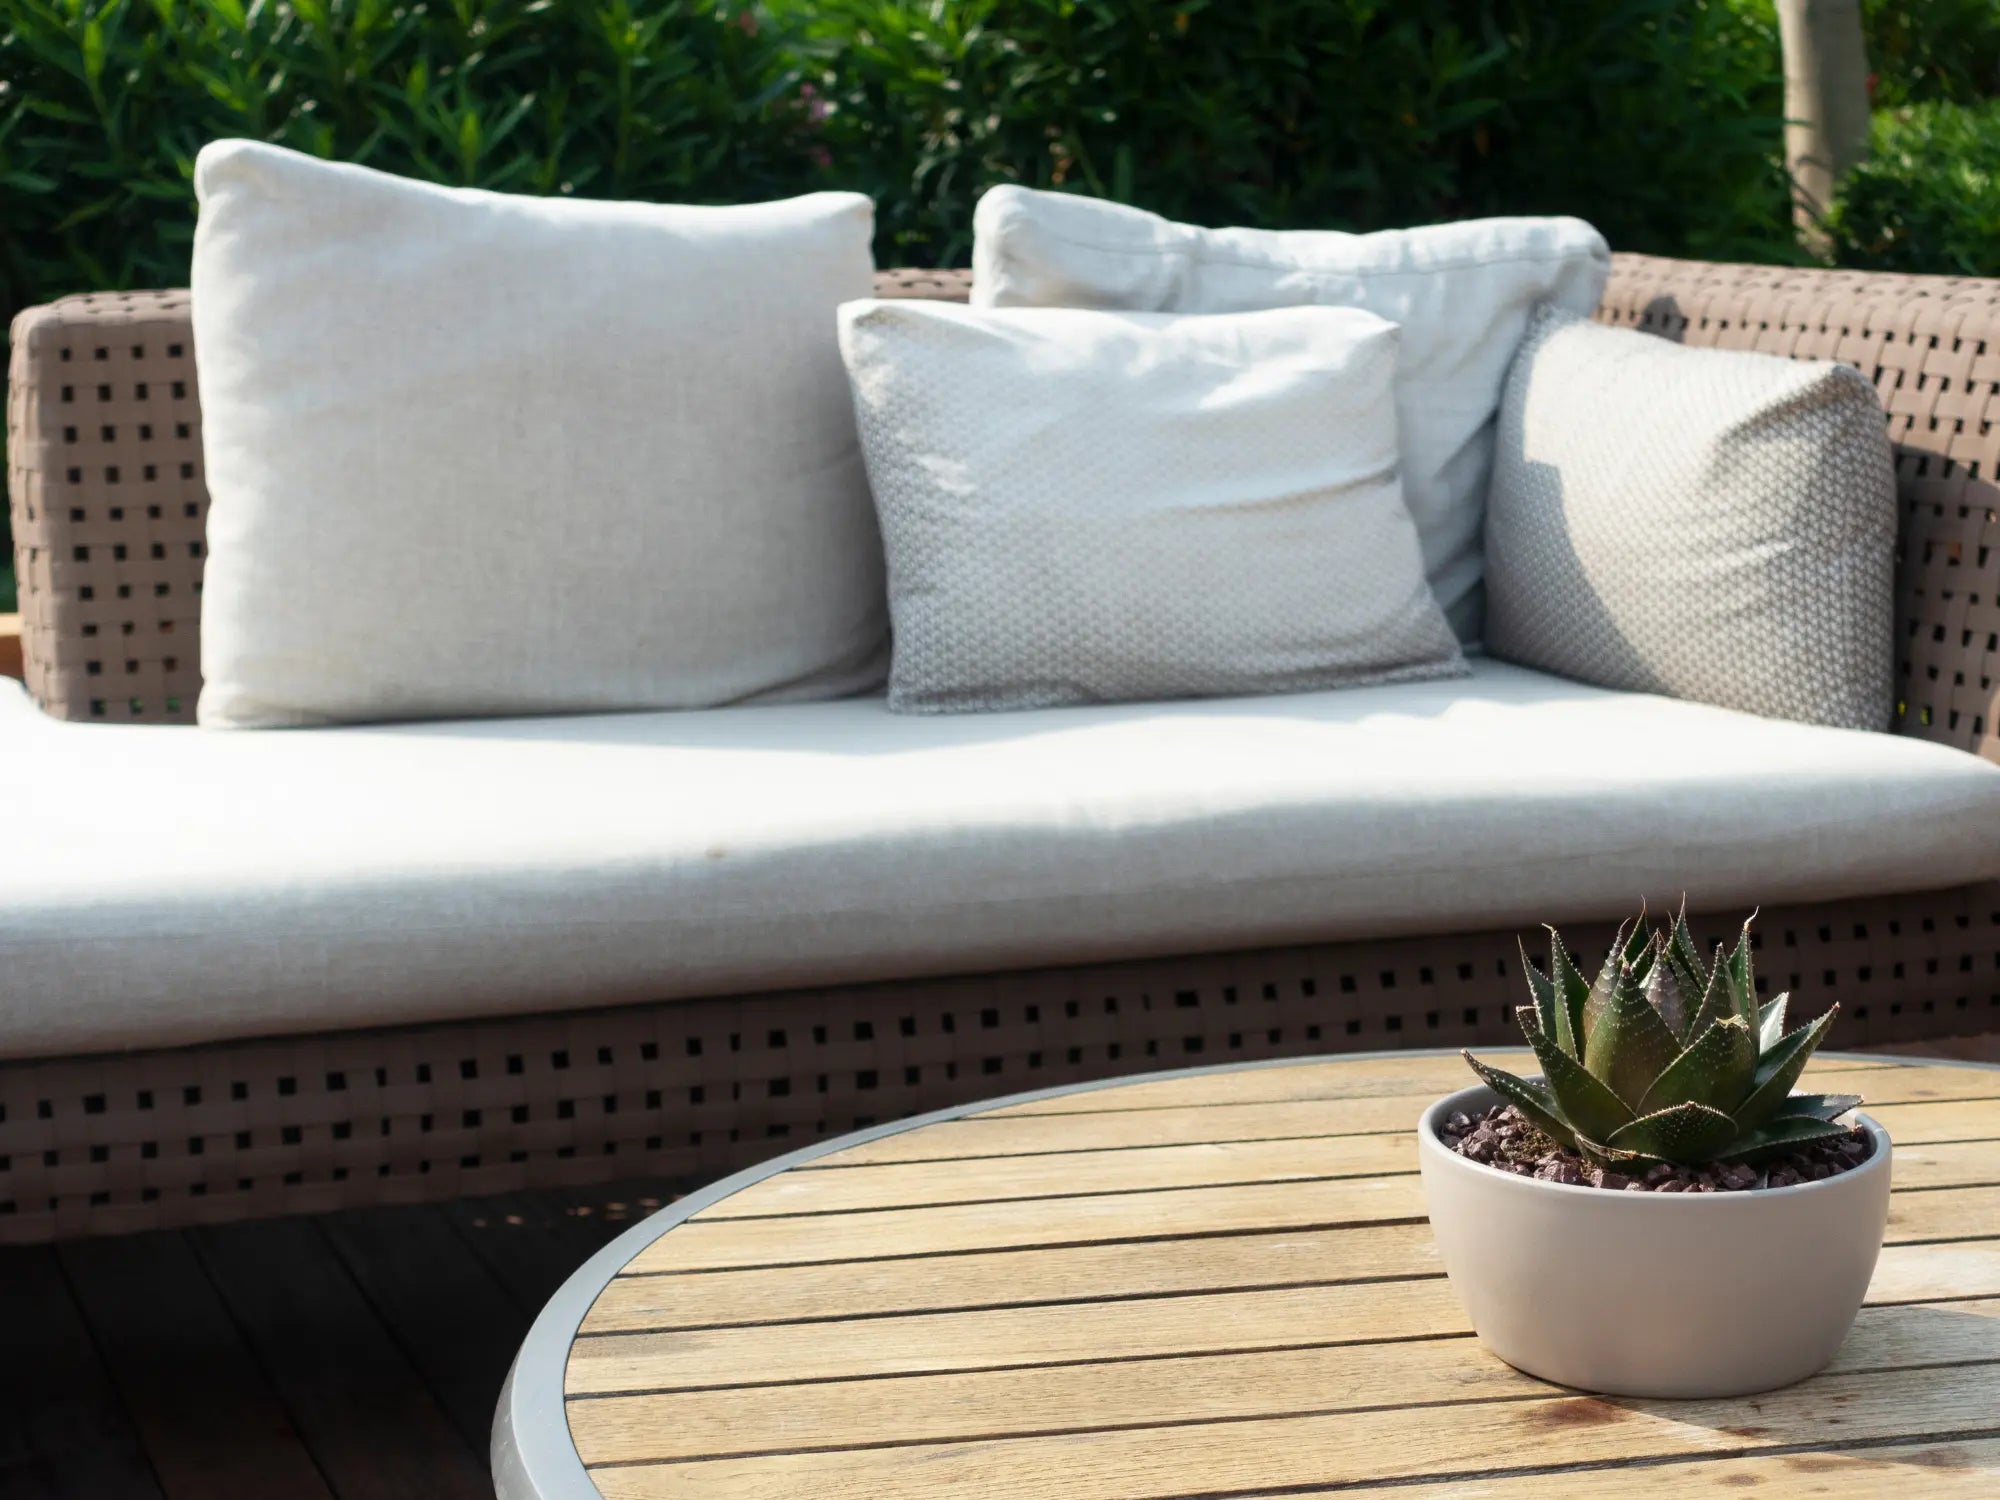 Extending the lifespan of your garden furniture